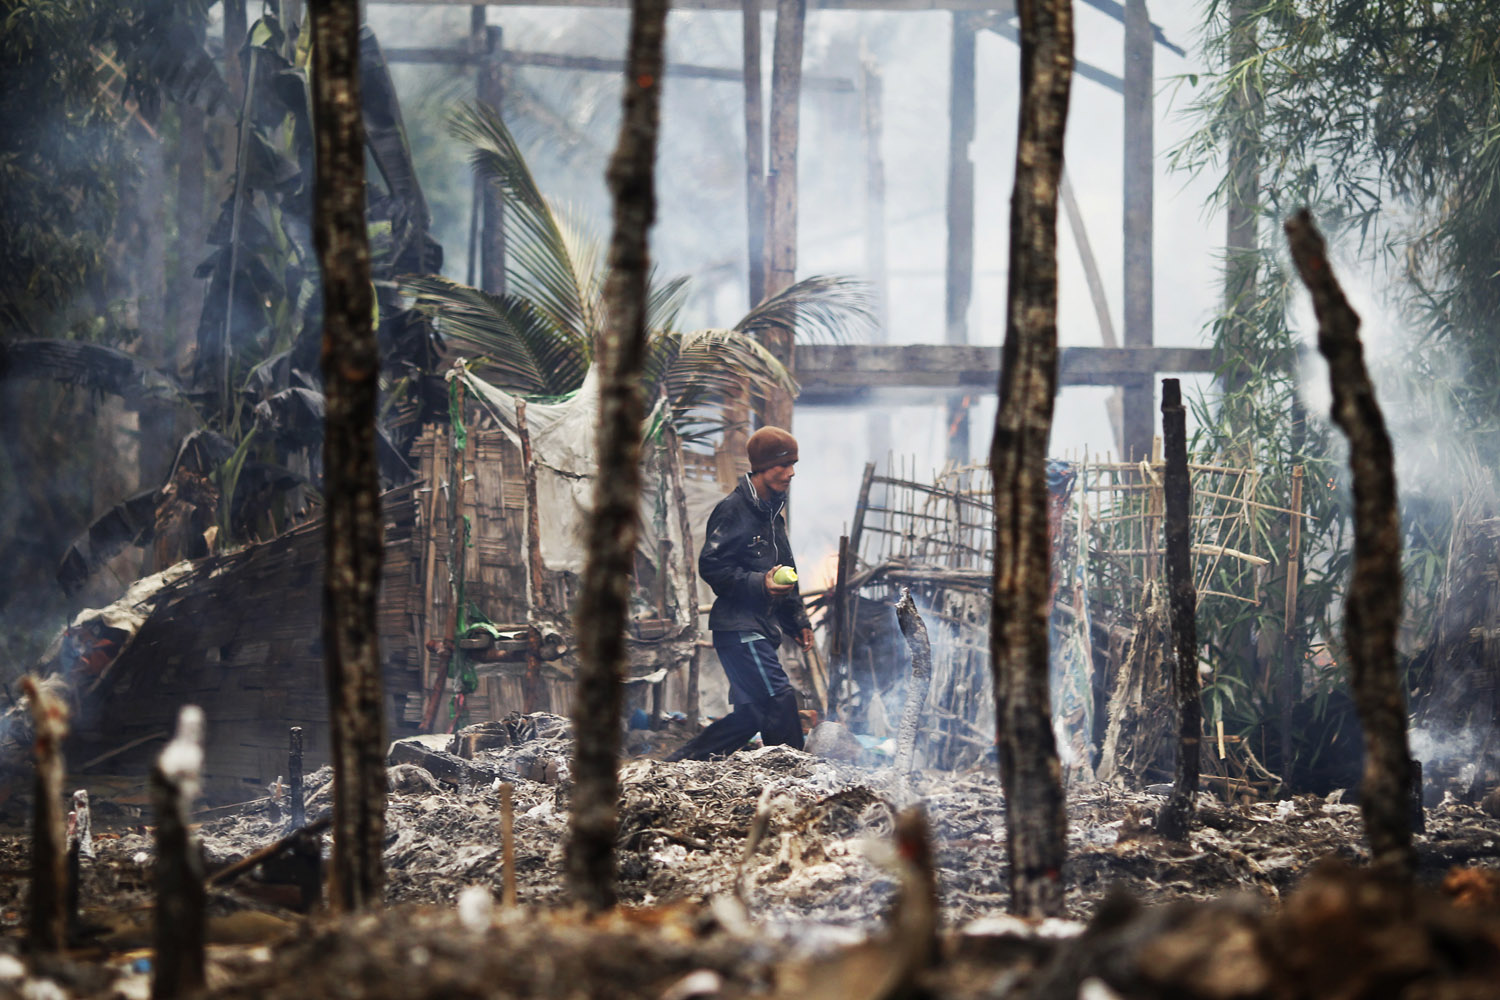 June 10, 2012. A man walks though a burnt Rohingya village during fighting between Buddhist Rakhine and Muslim Rohingya communities in Sittwe.